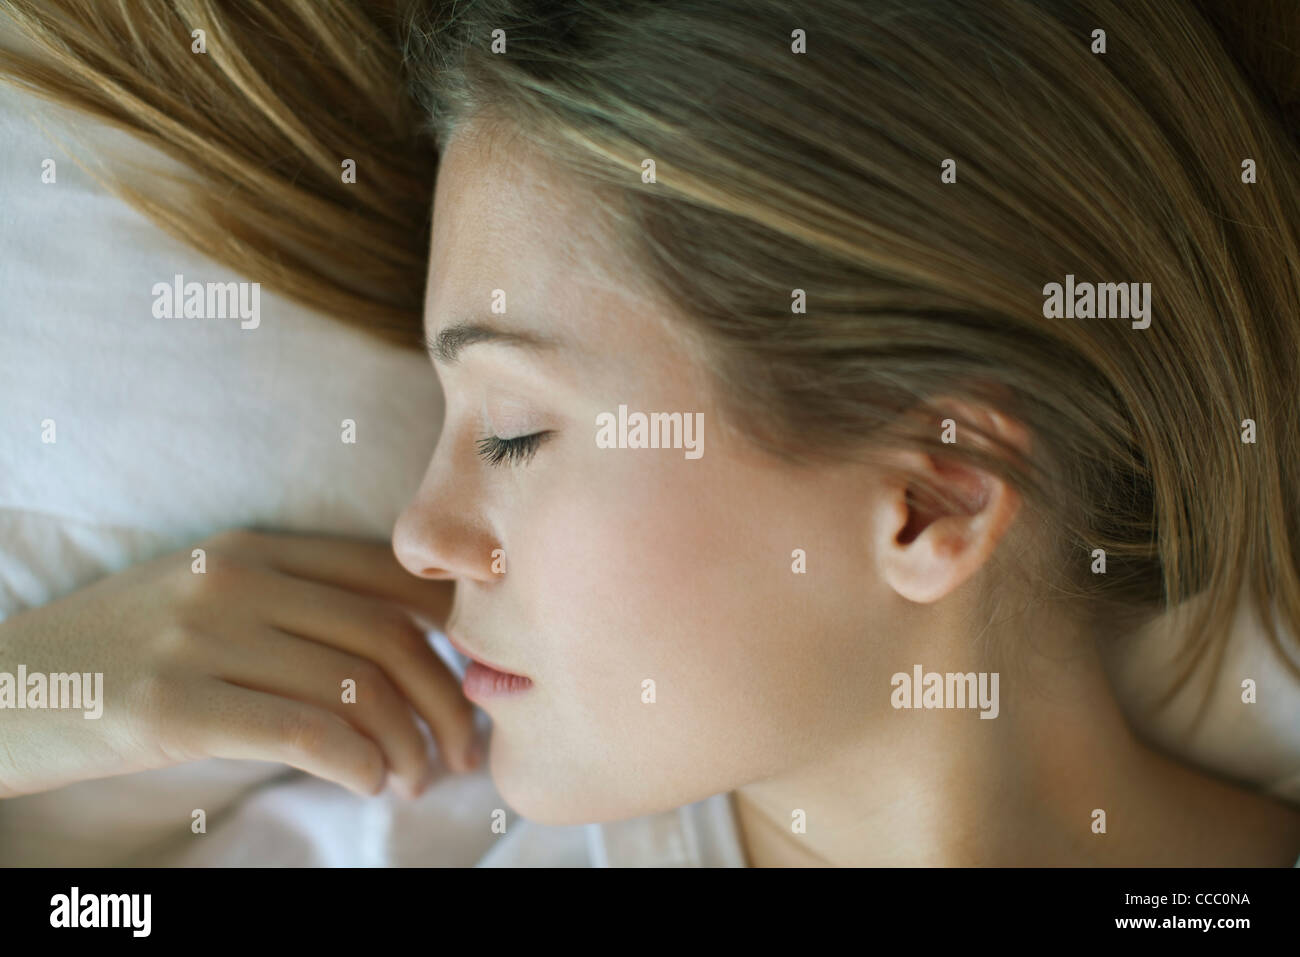 Woman sleeping, close-up Stock Photo